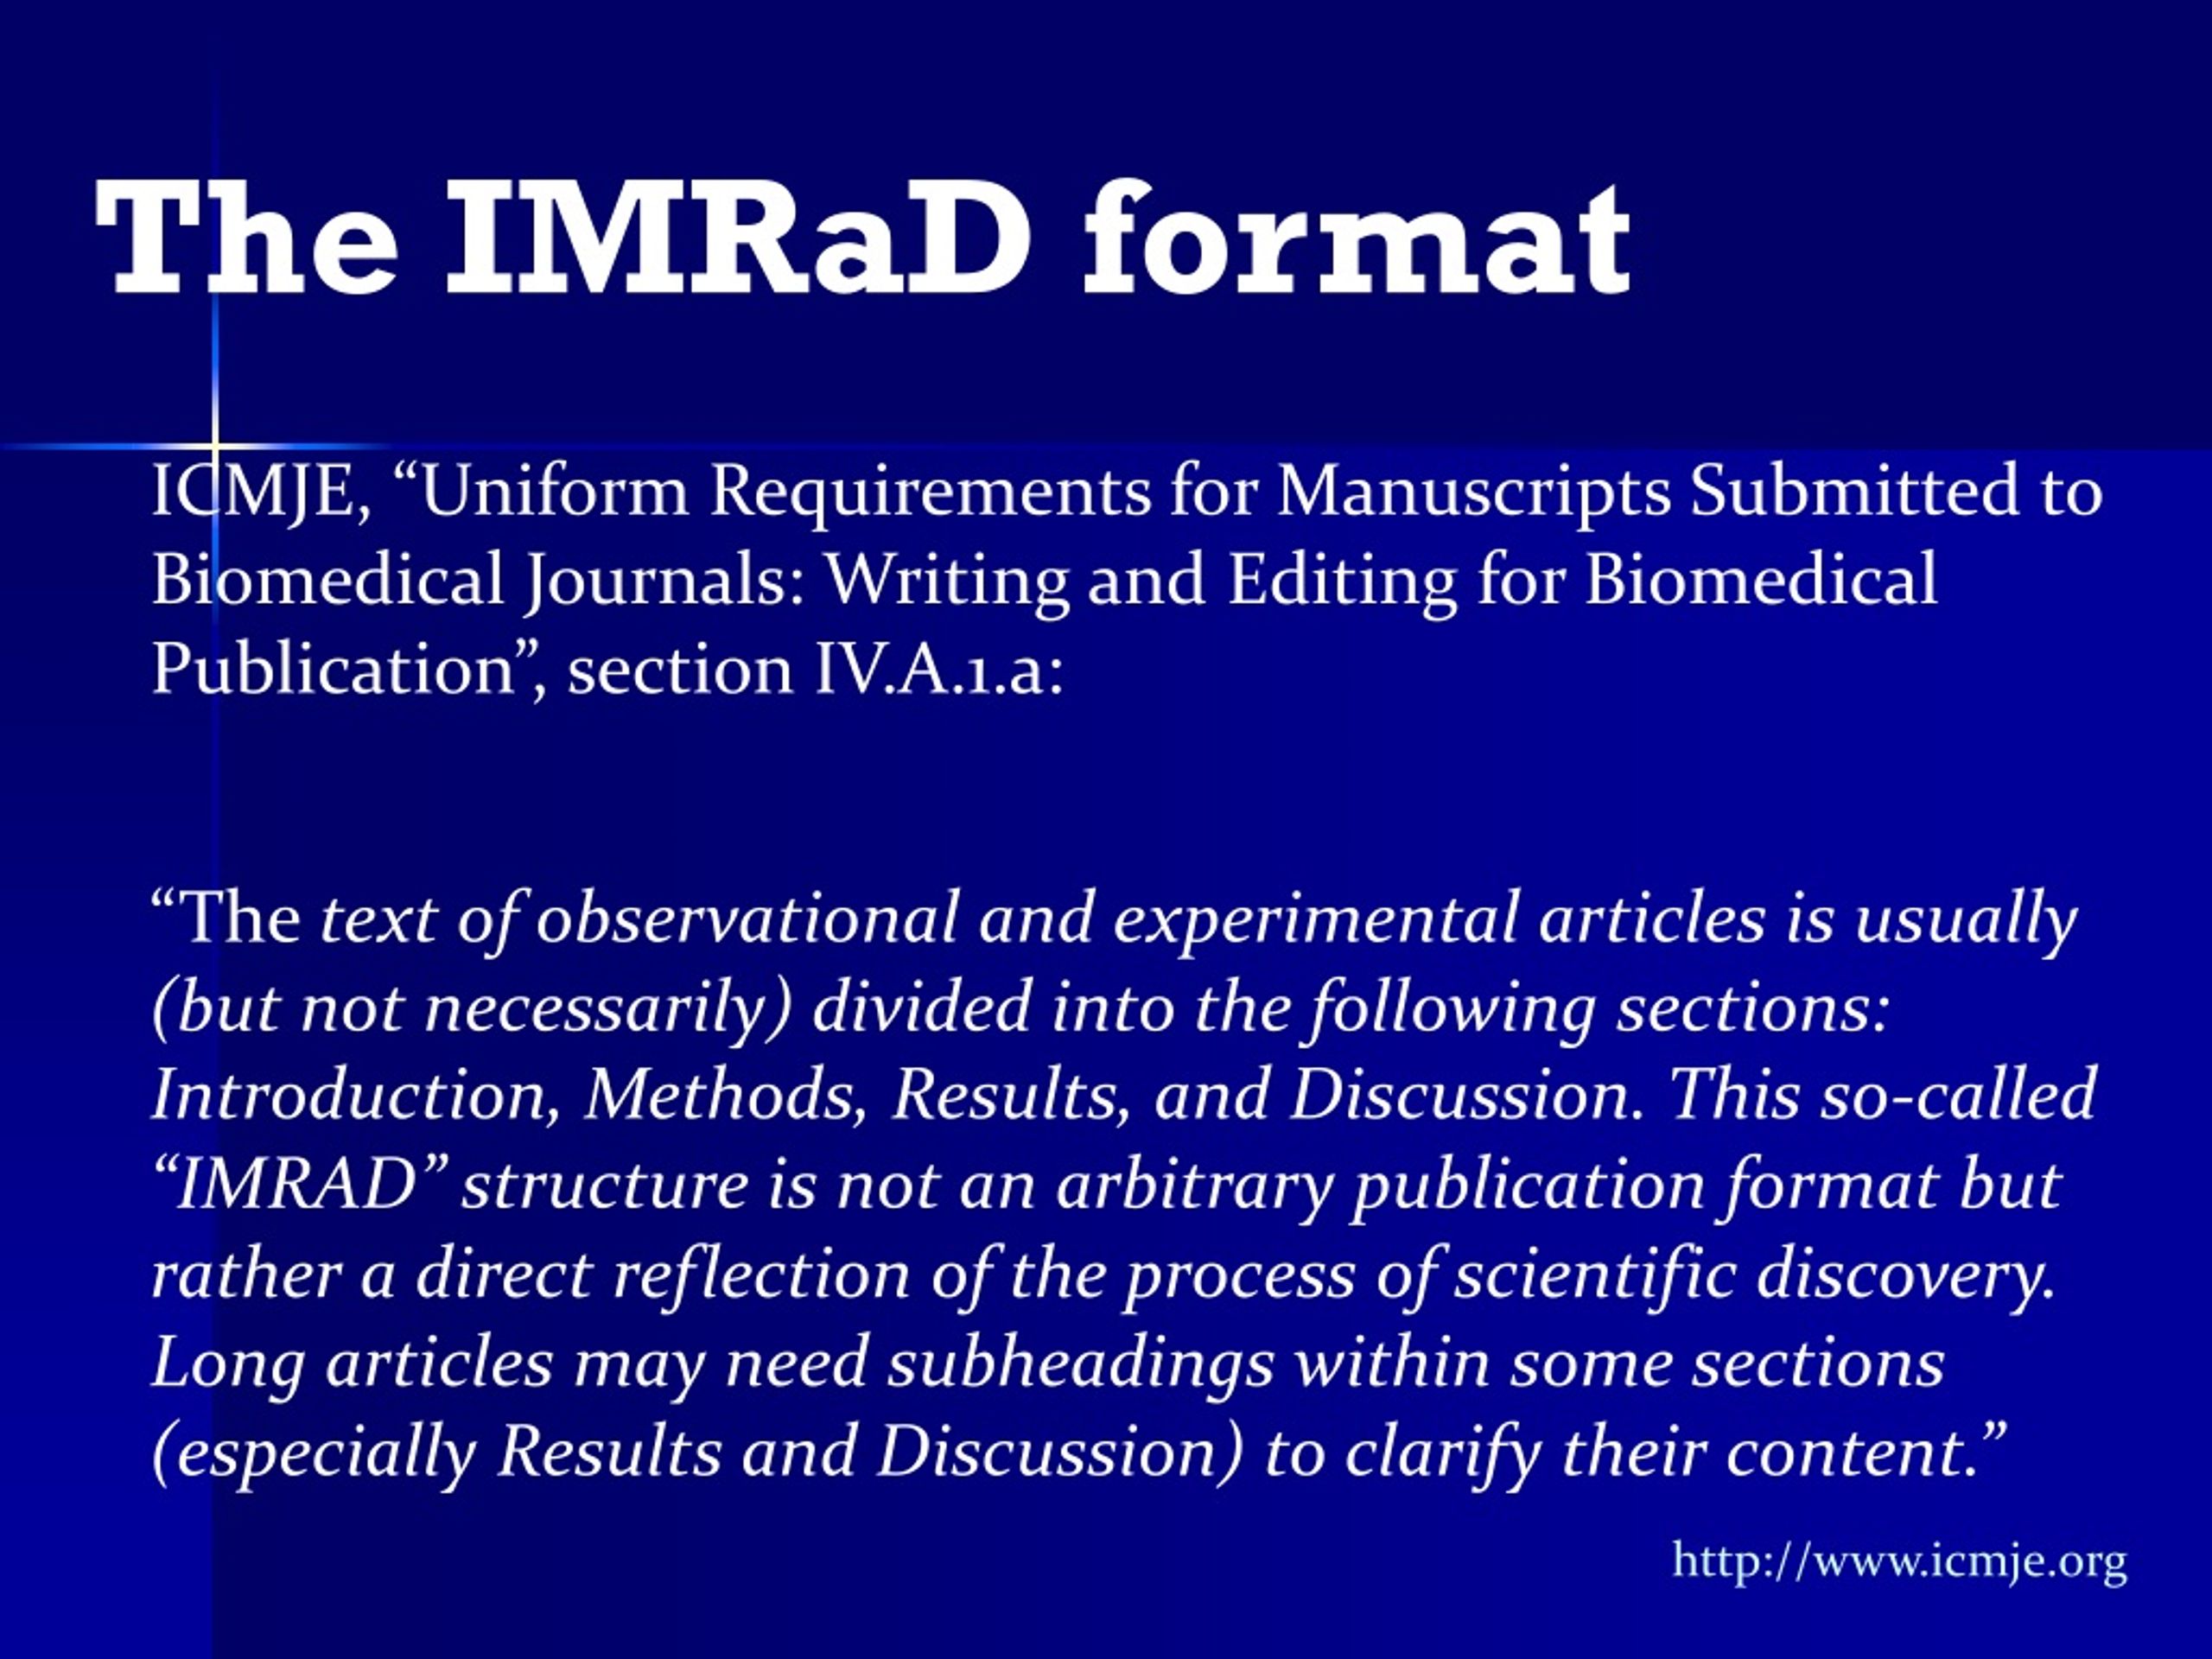 Implementation methods. Формат IMRAD. Структура IMRAD. IMRAD Introduction. Модель статьи IMRAD.